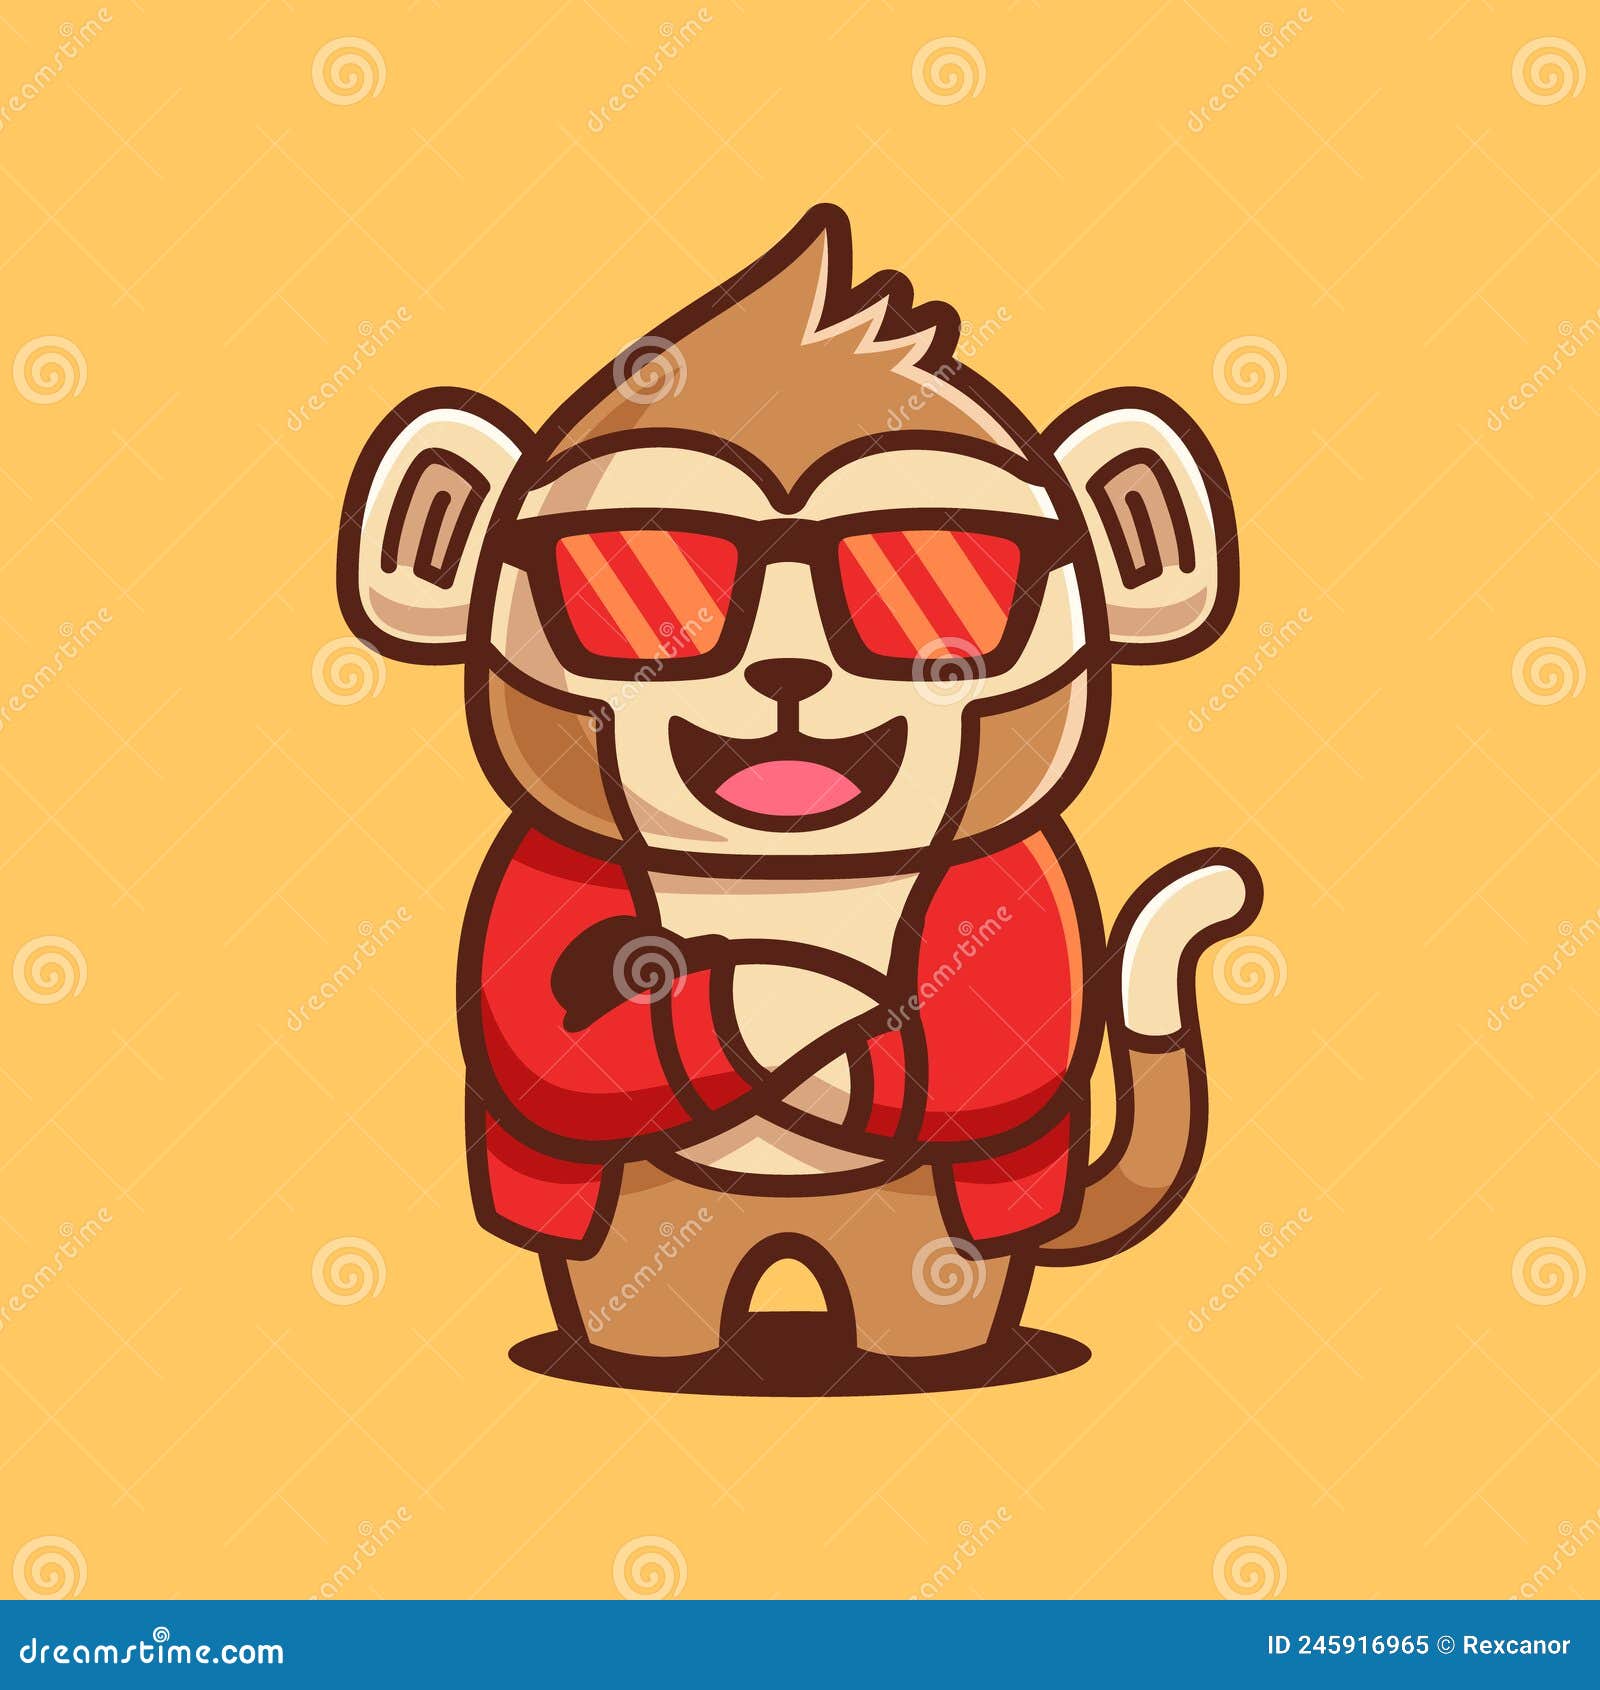 Cool Monkey Wear Sunglasses Cartoon Character Stock Vector - Illustration  of animal, apparel: 245916965